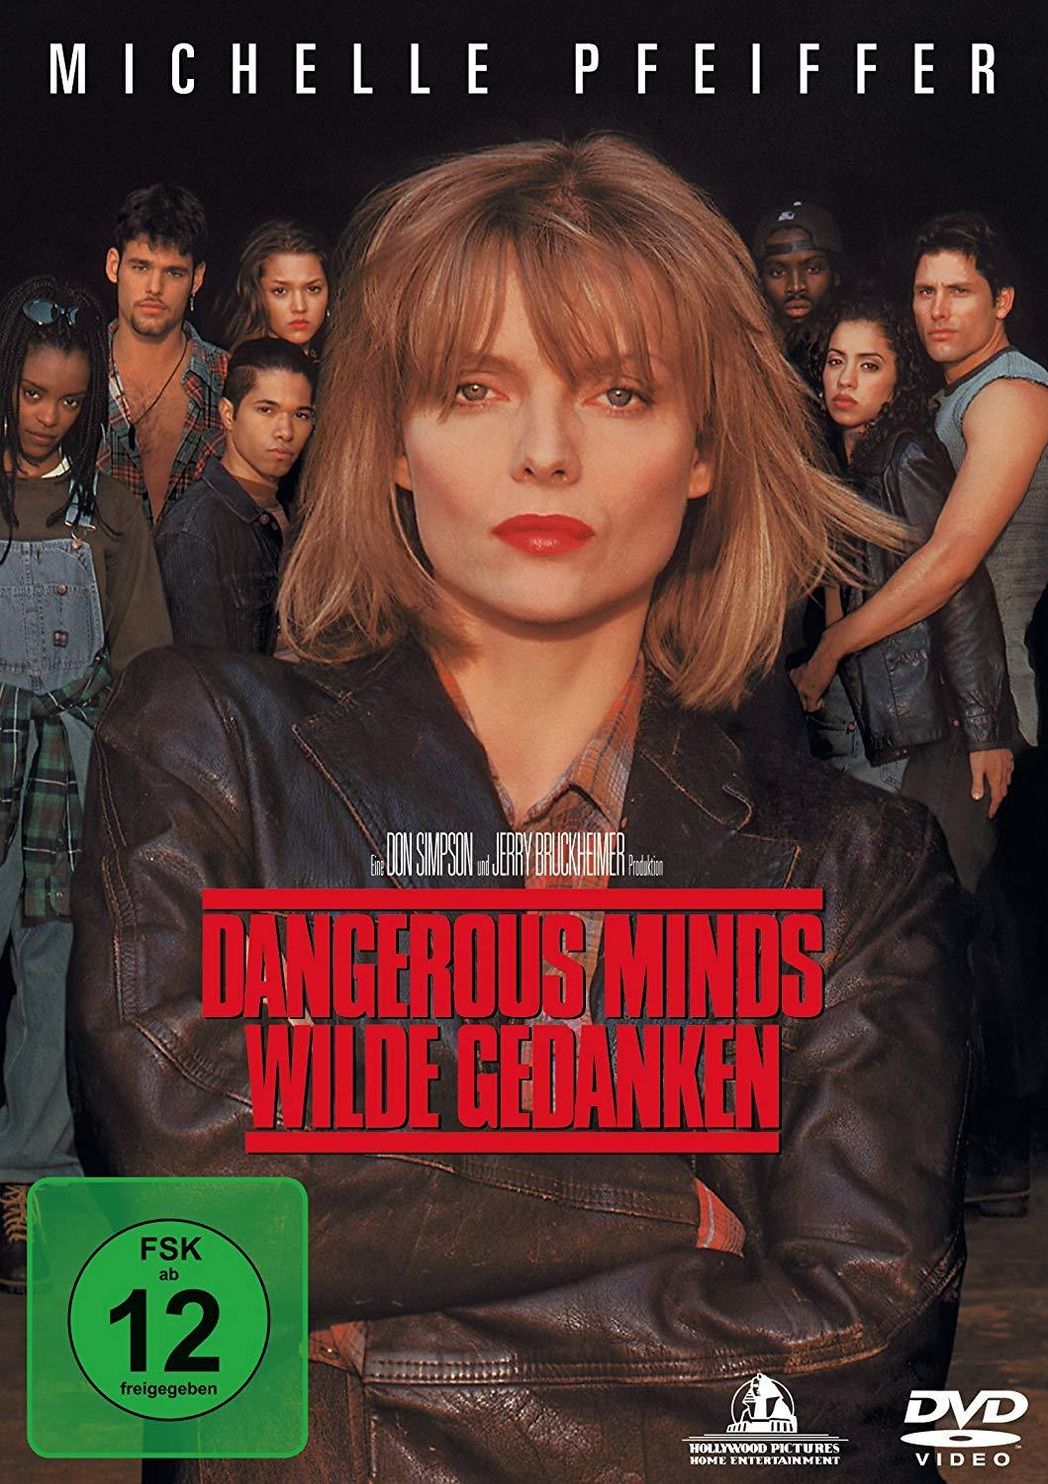 Dangerous Minds - Wilde Gedanken DVD bei Weltbild.de bestellen